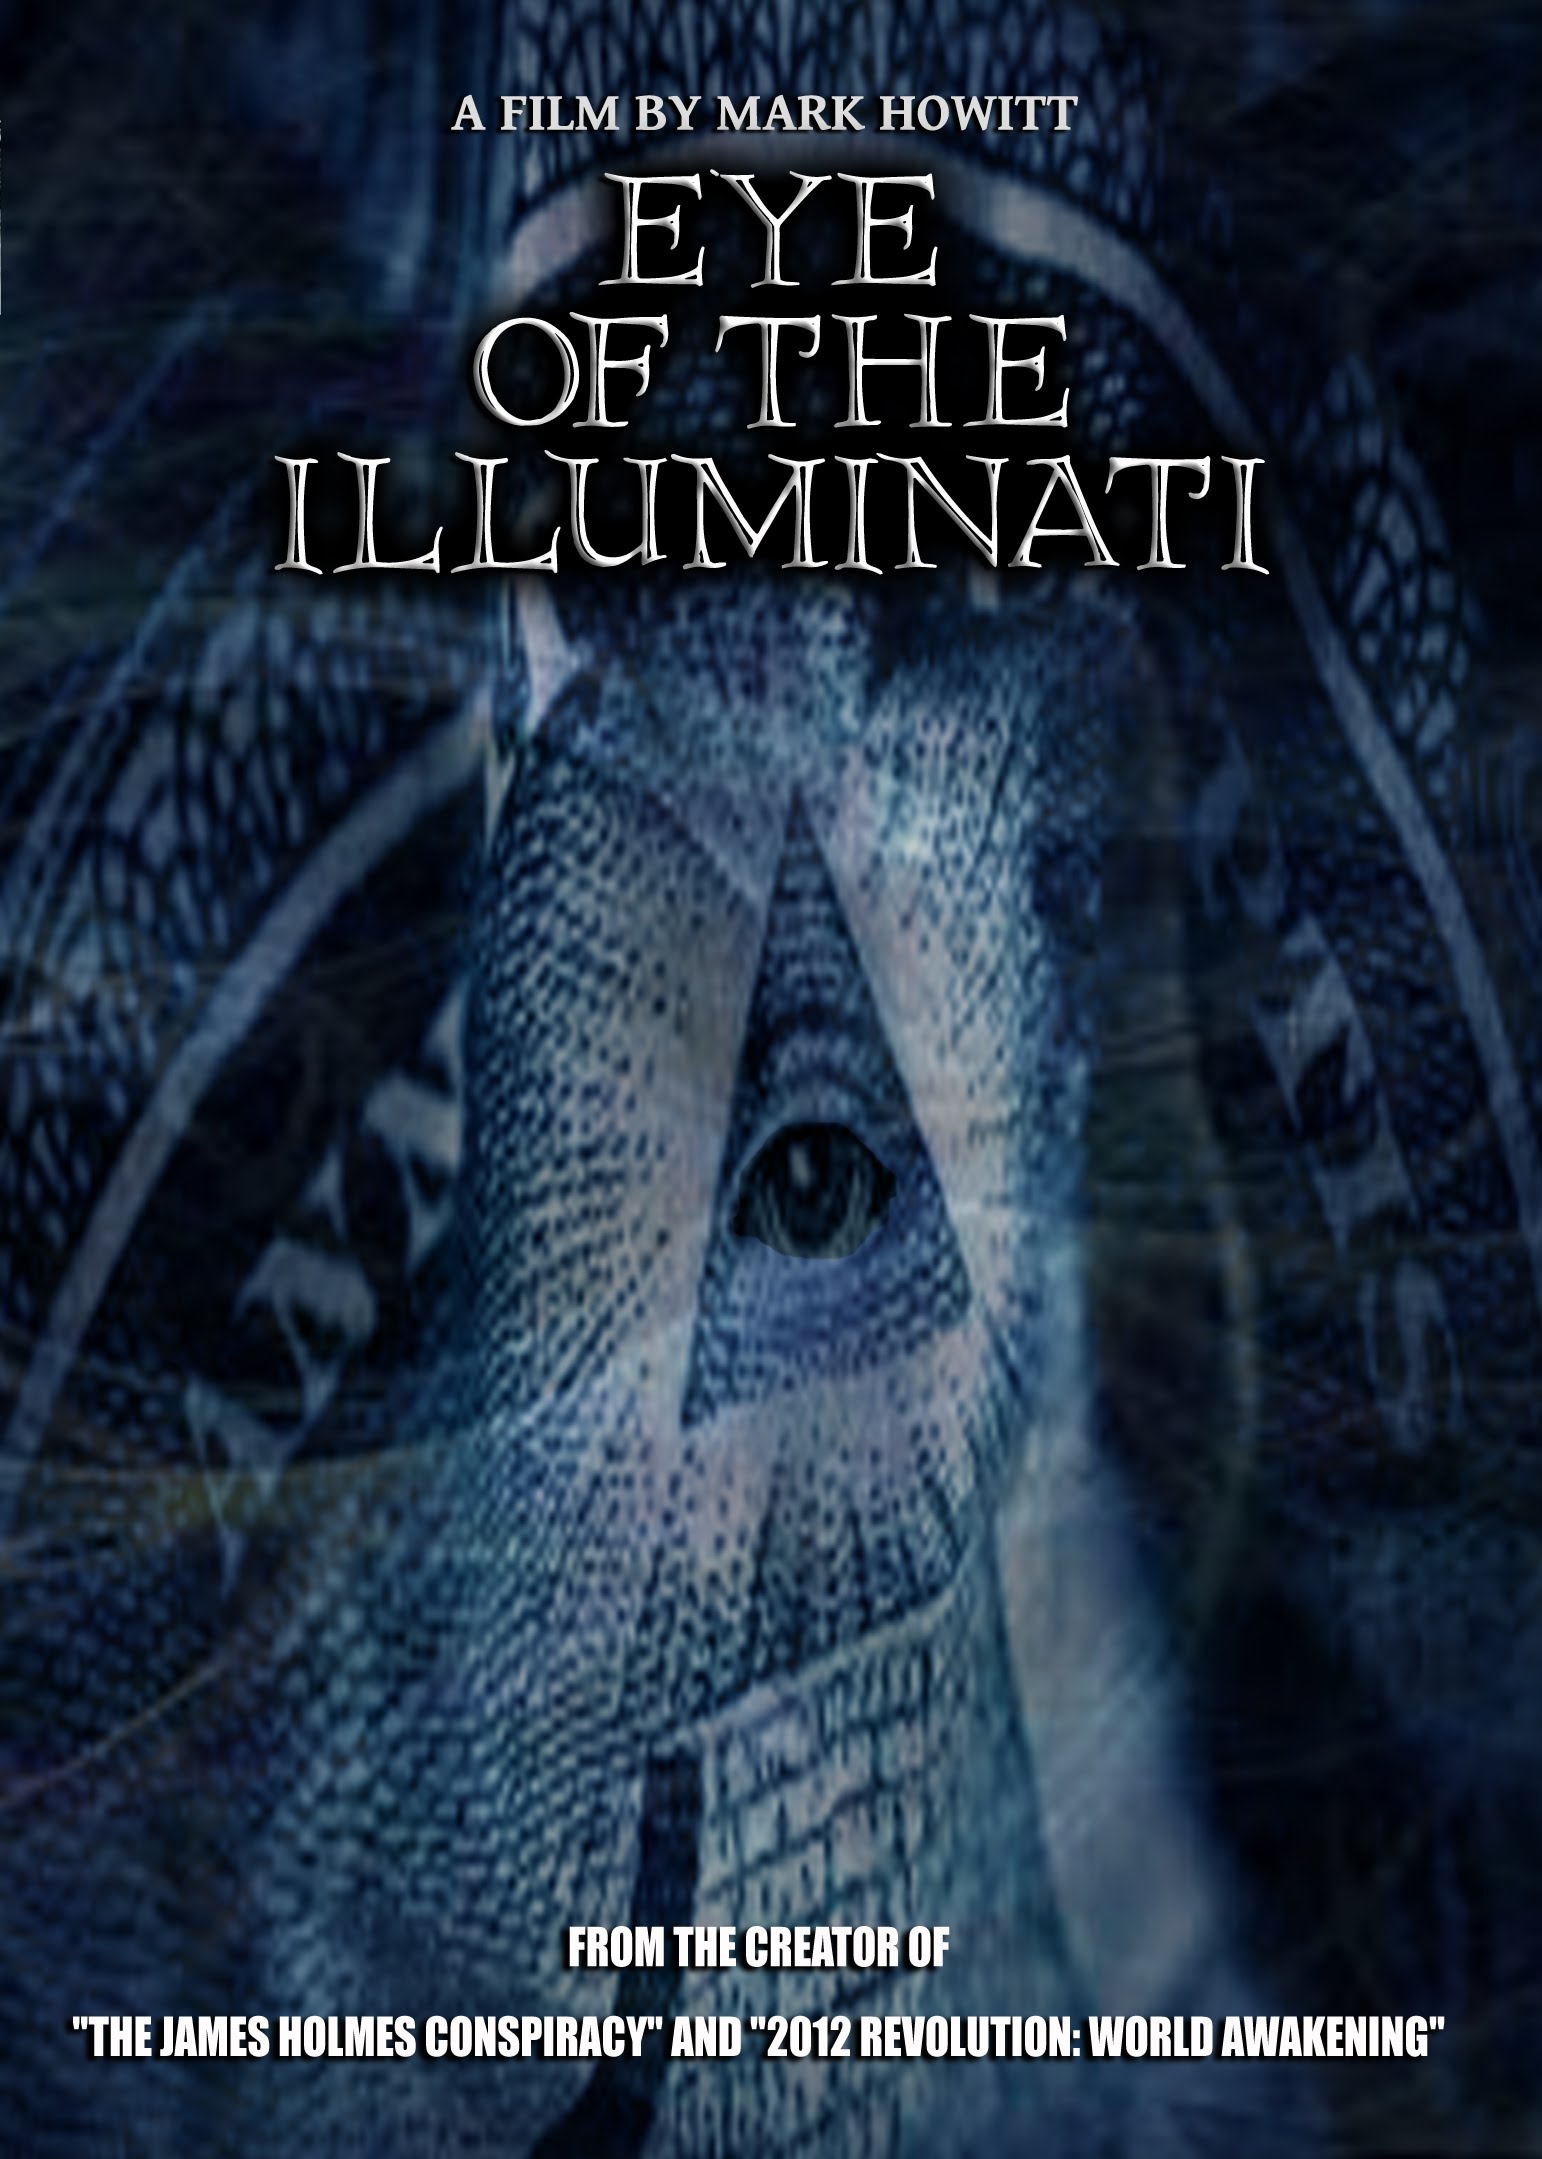 EYE OF THE ILLUMINATI (2012) Documentary